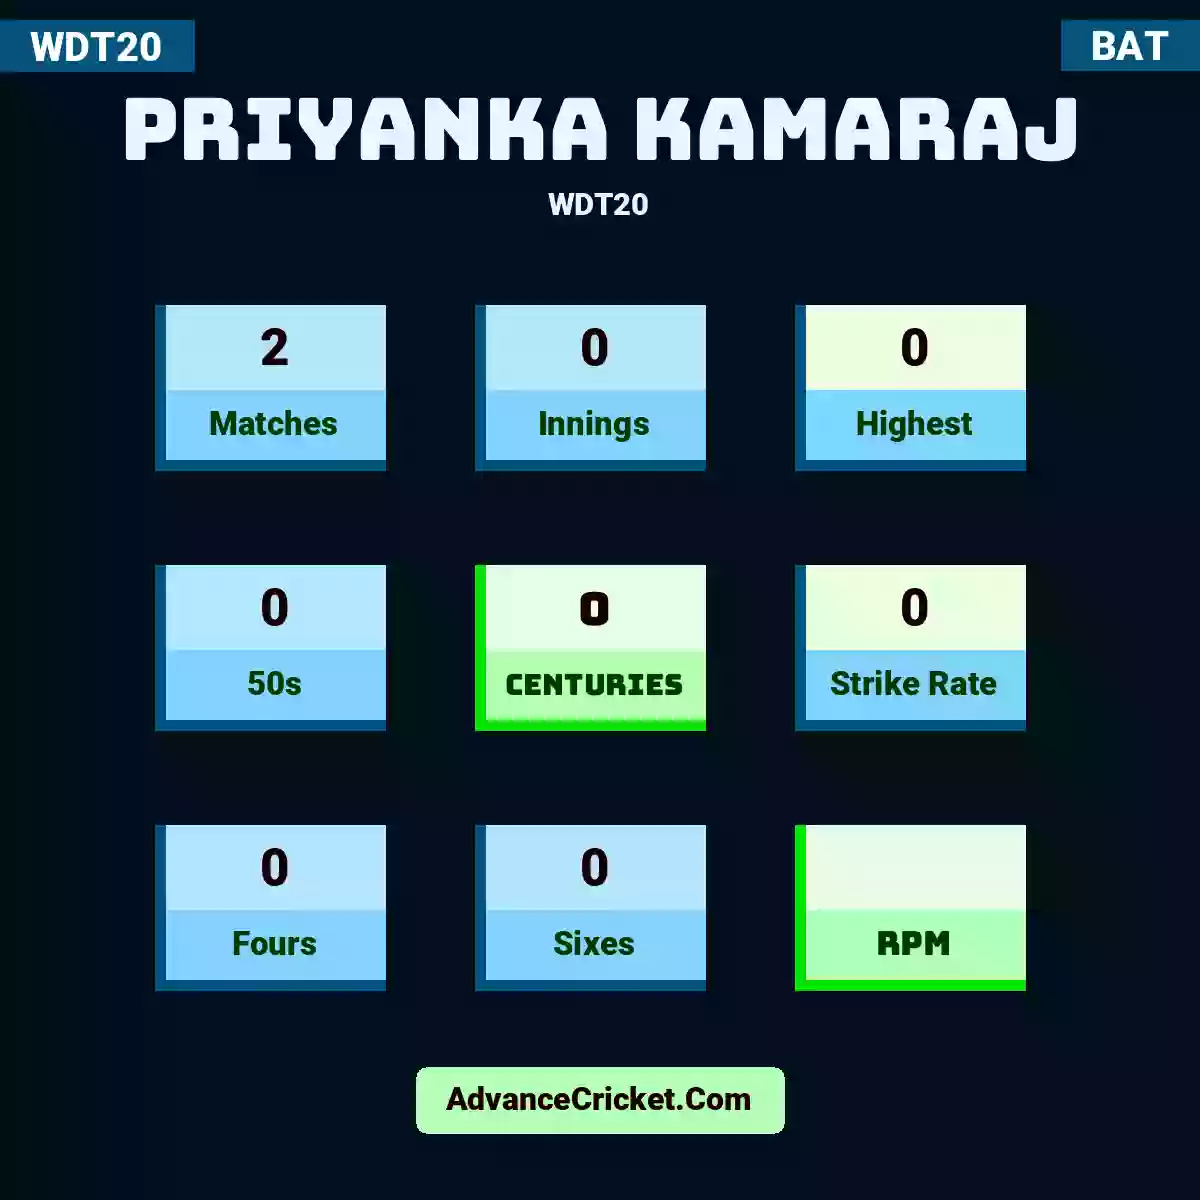 Priyanka Kamaraj WDT20 , Priyanka Kamaraj played 2 matches, scored 0 runs as highest, 0 half-centuries, and 0 centuries, with a strike rate of 0. P.Kamaraj hit 0 fours and 0 sixes.